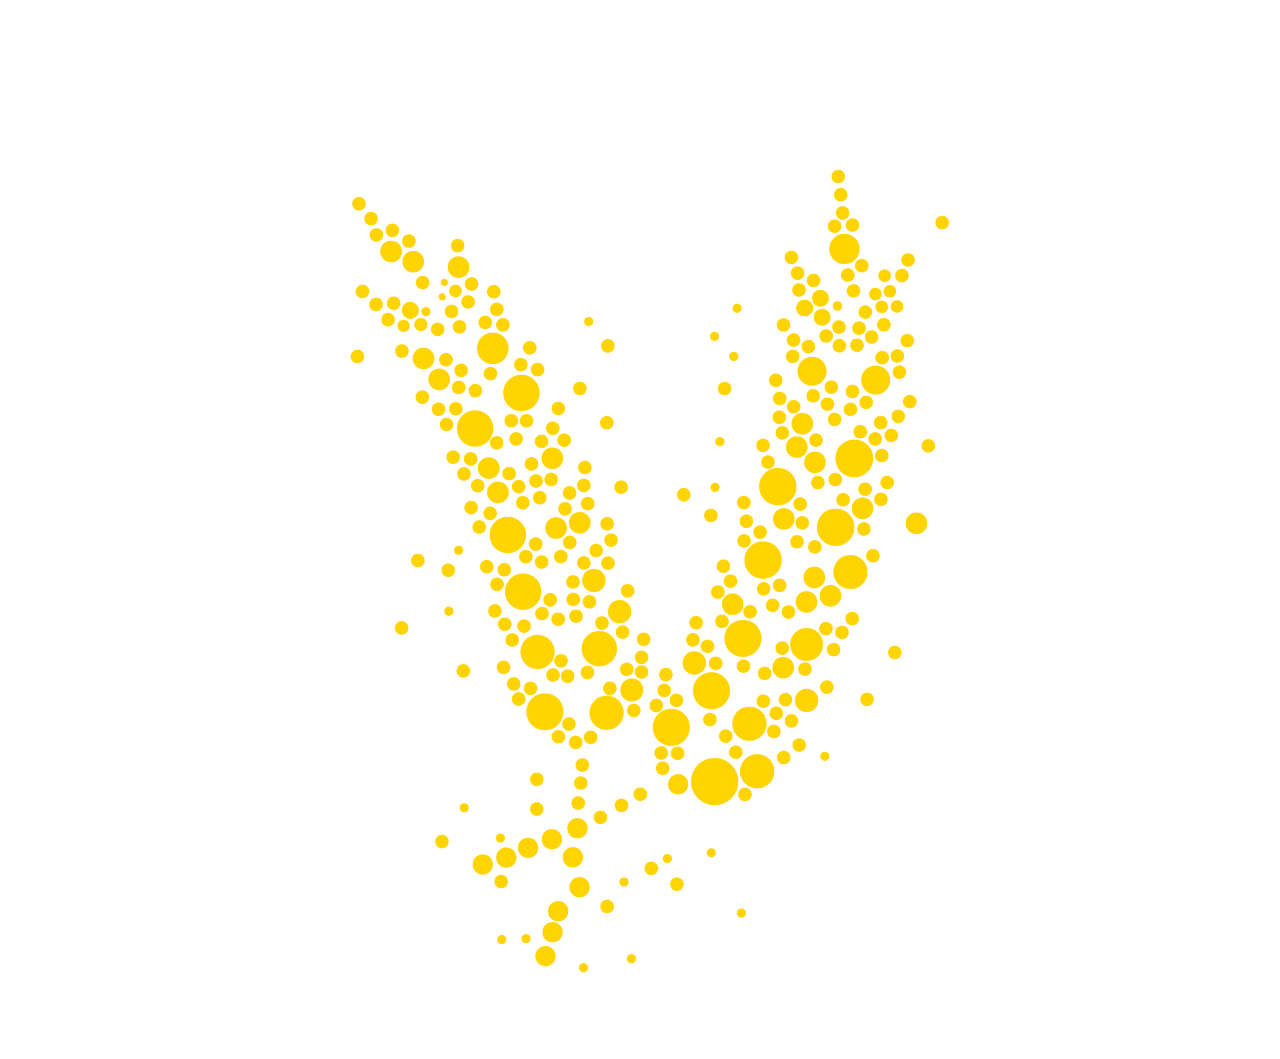 Yellow circles form the shape of barley